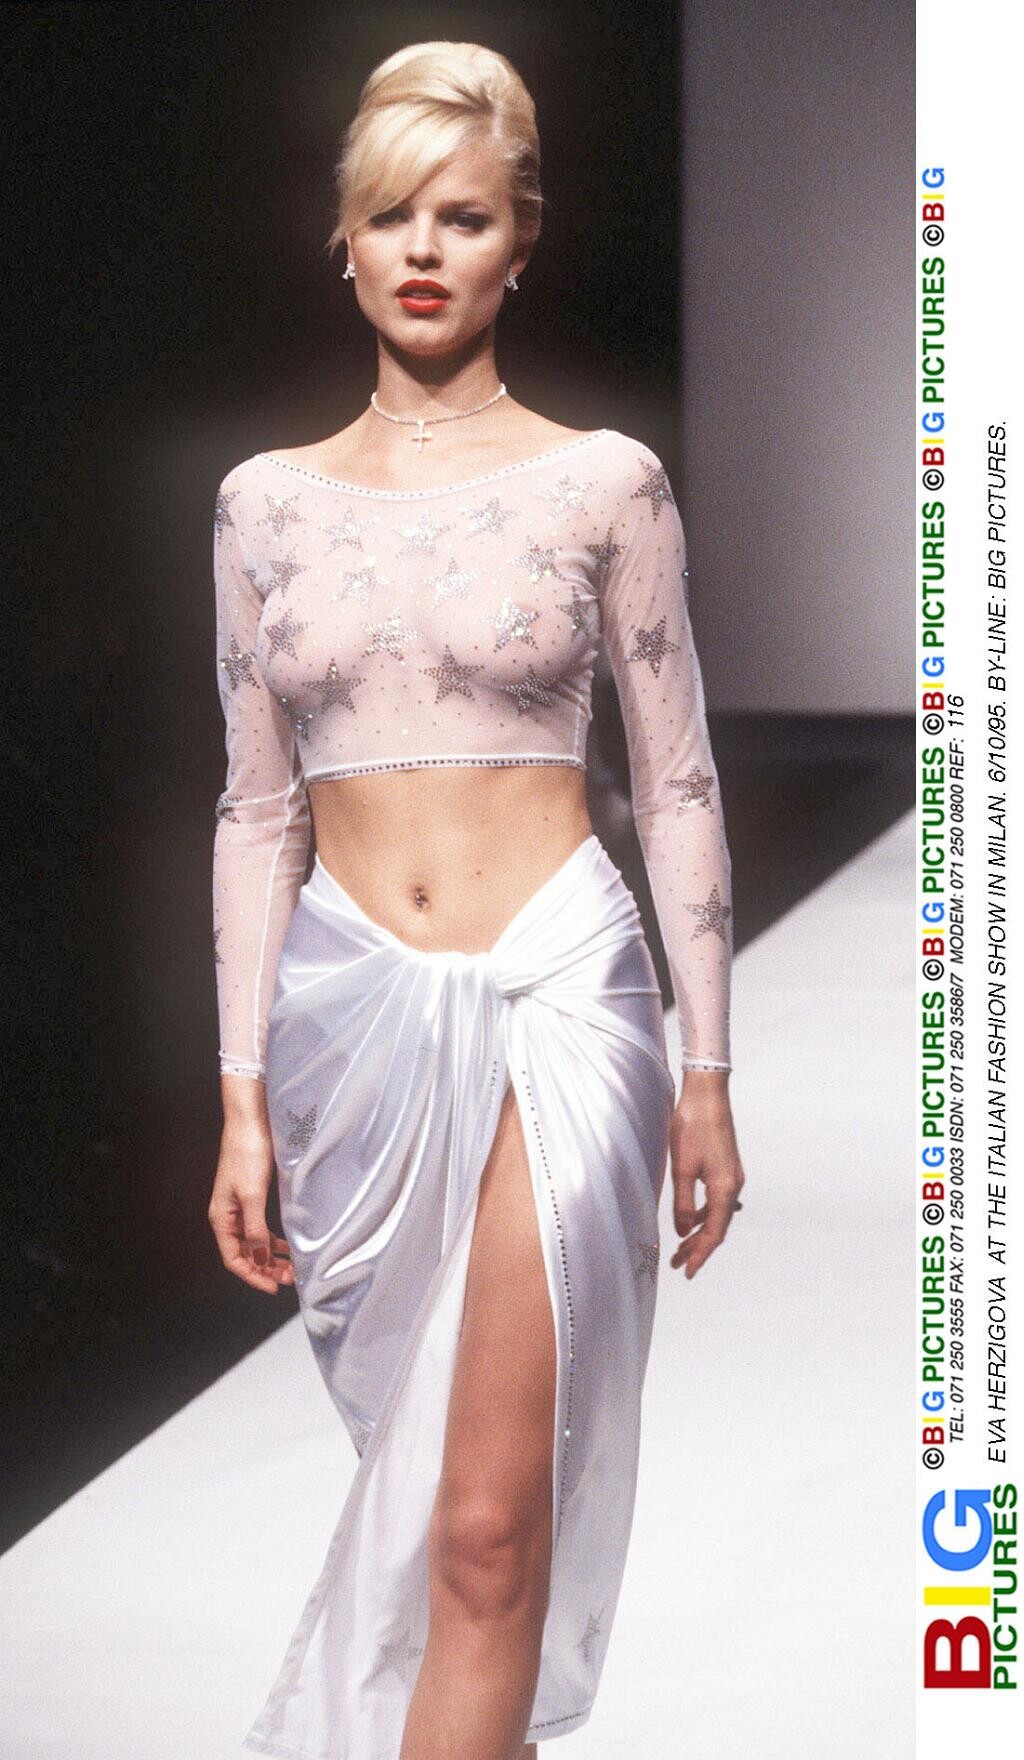 Eva Herzigova - Page 124 - Female Fashion Models - Bellazon